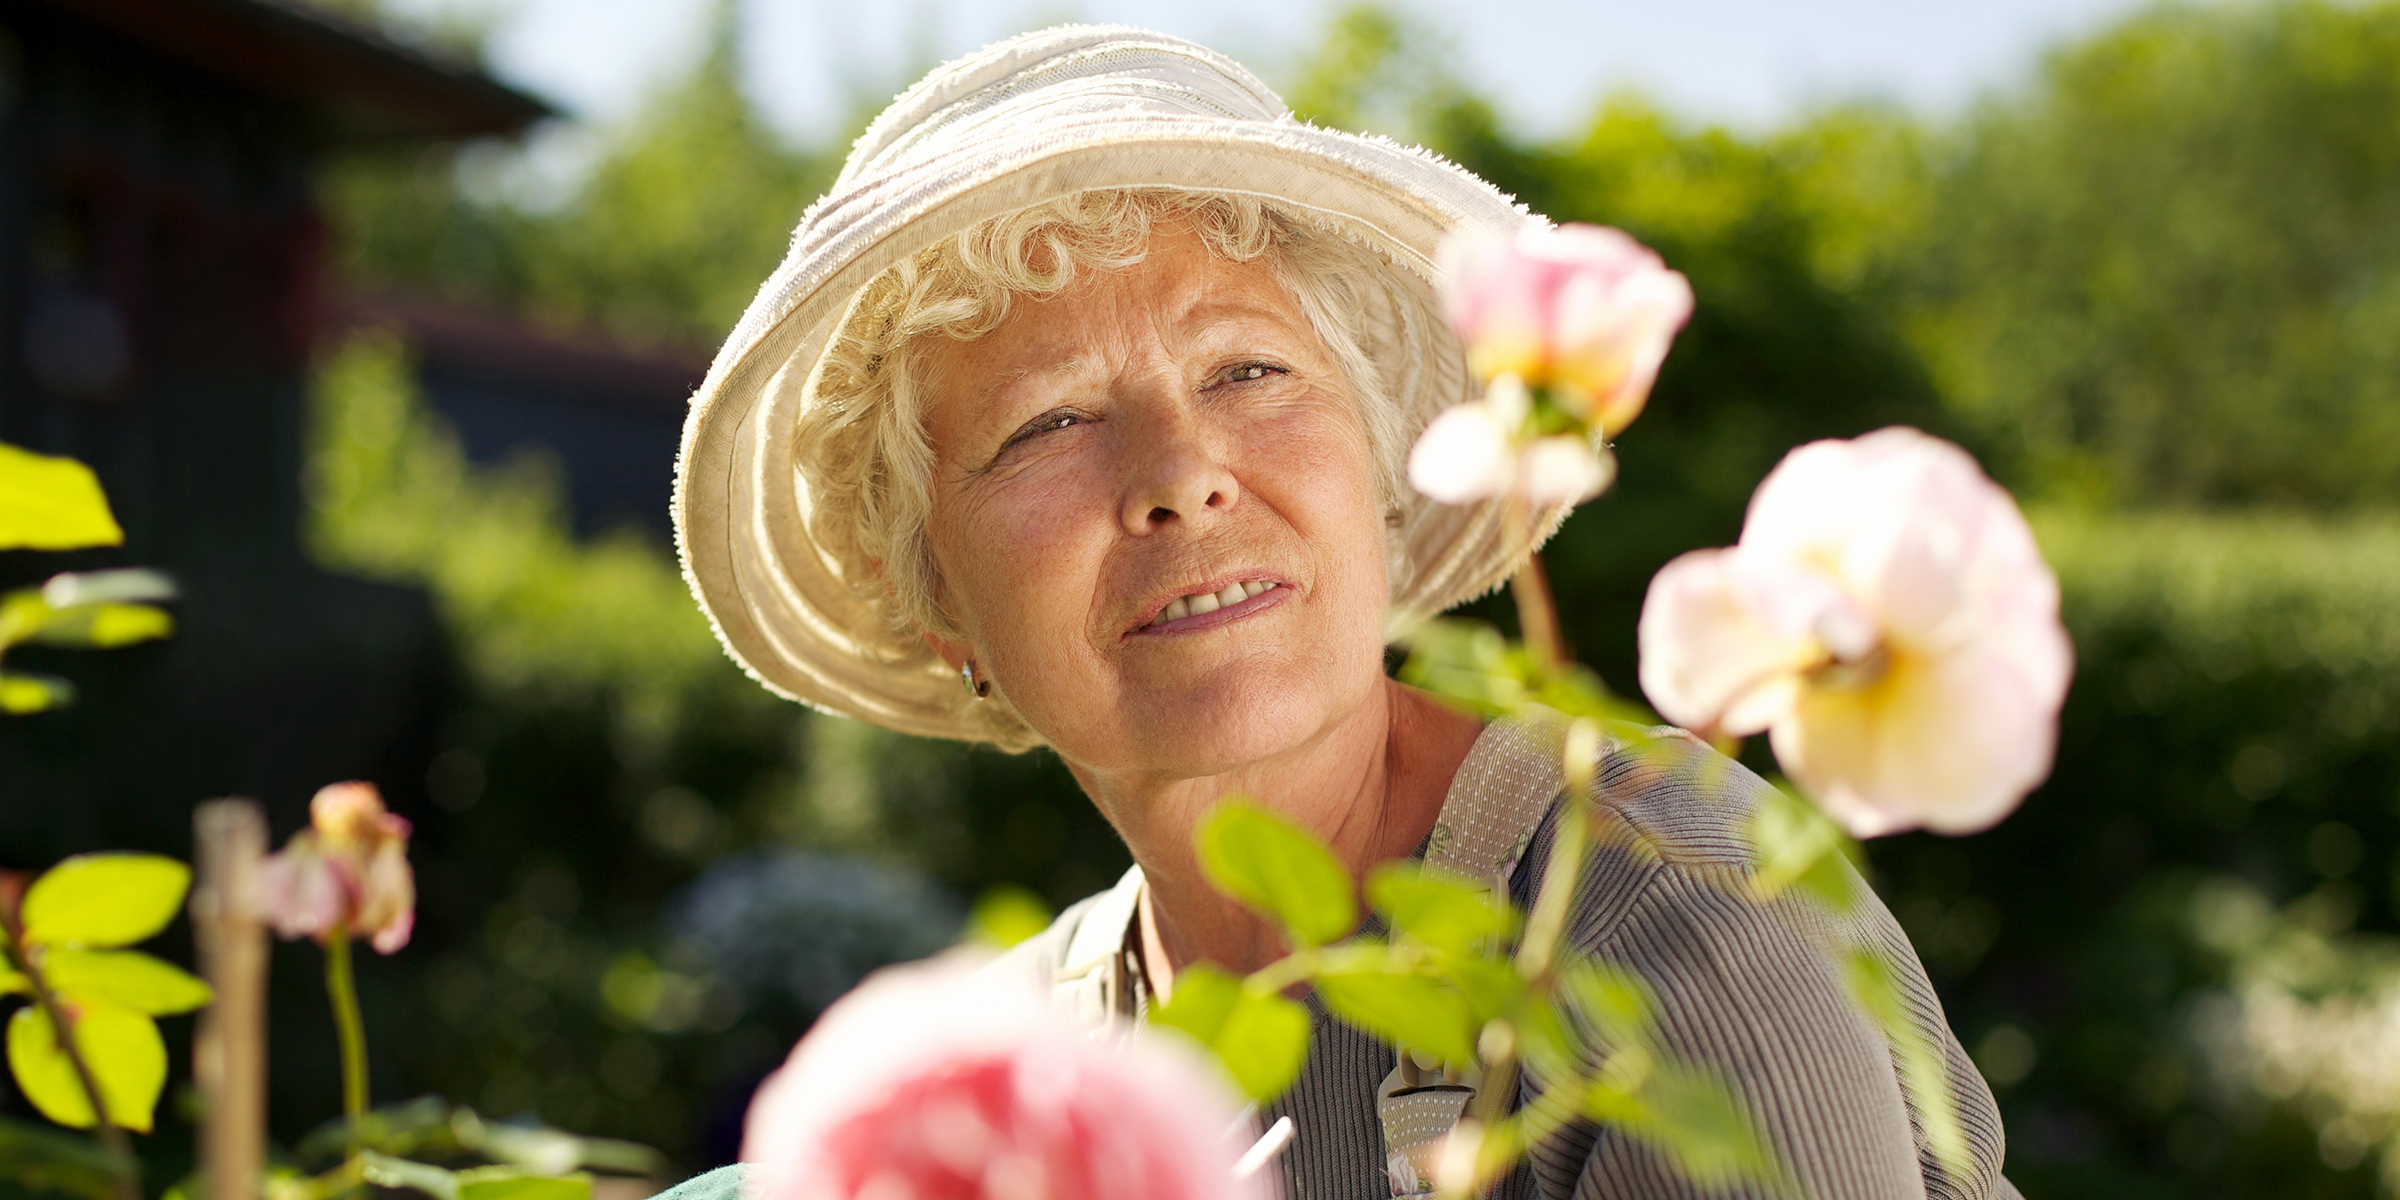 Elderly woman gardening | Source: Shutterstock